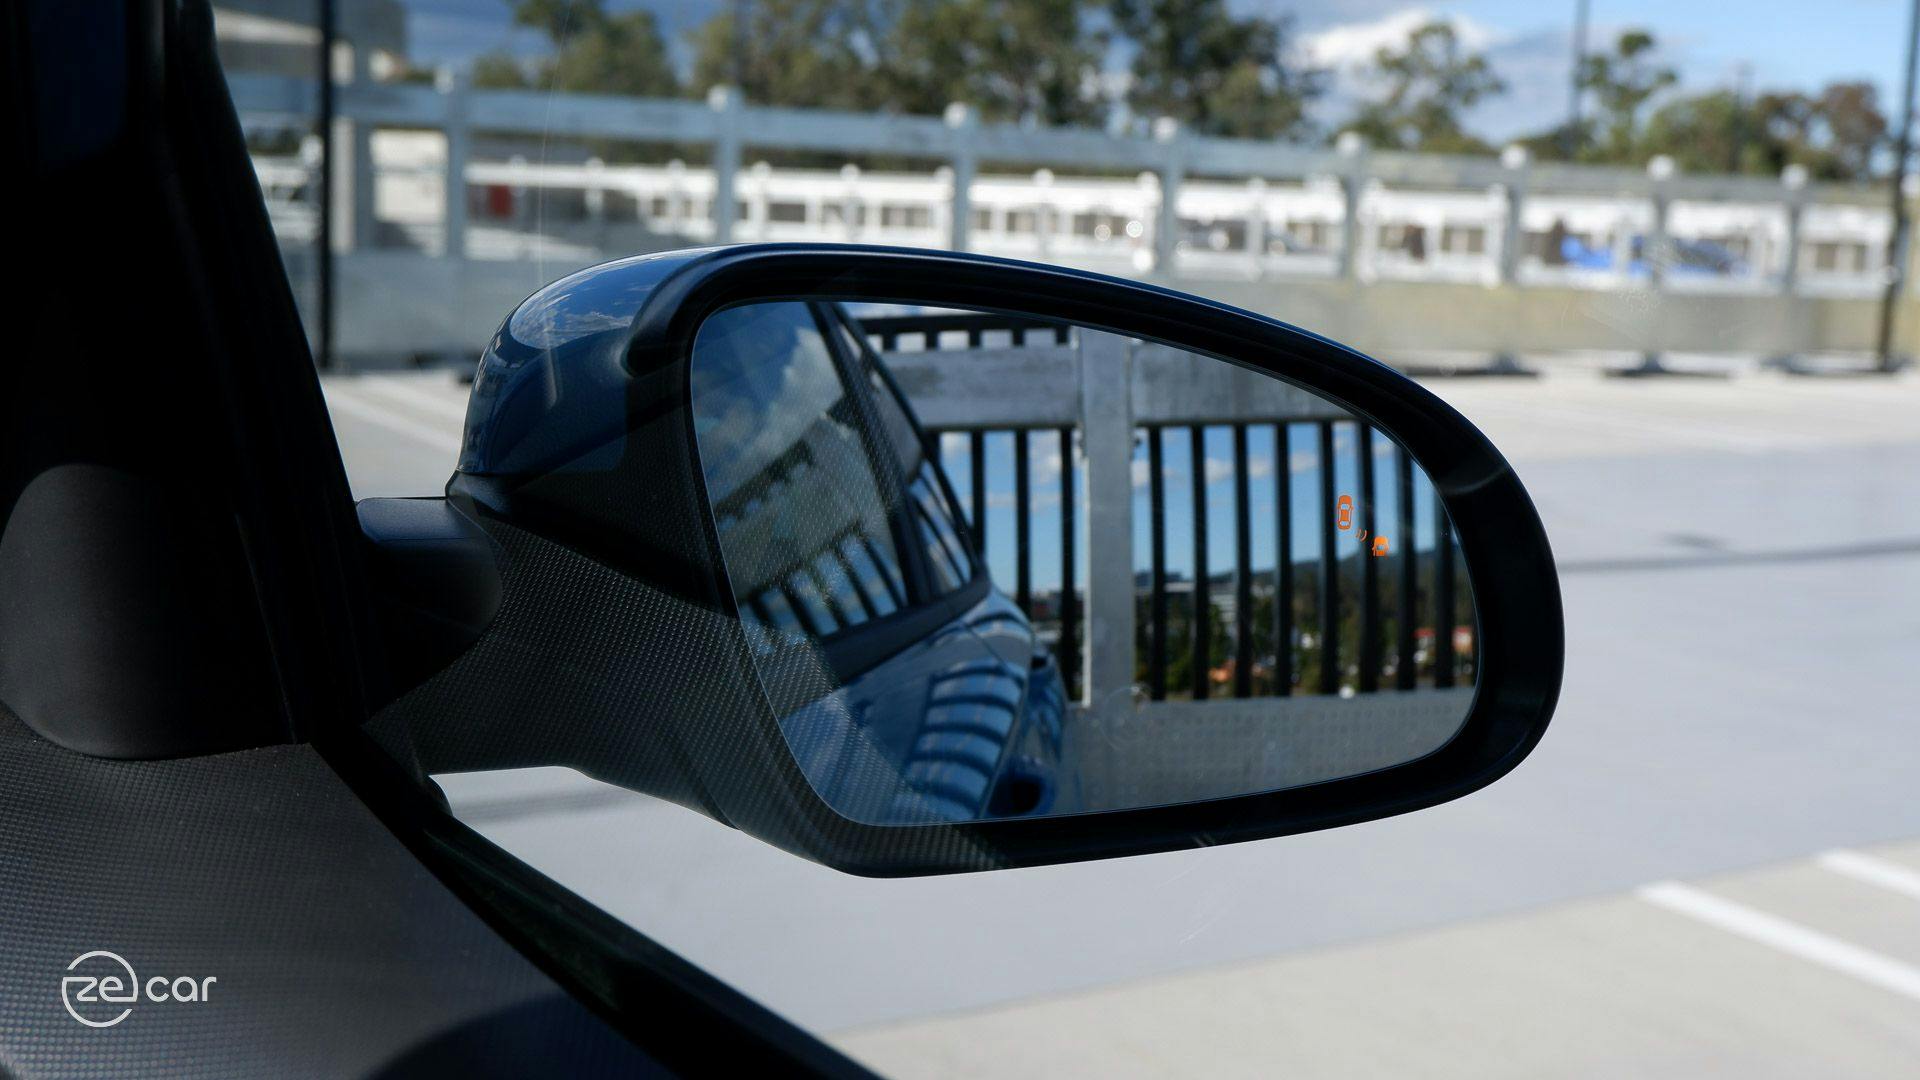 Hyundai Kona Electric wing mirror with blind spot alert orange light on